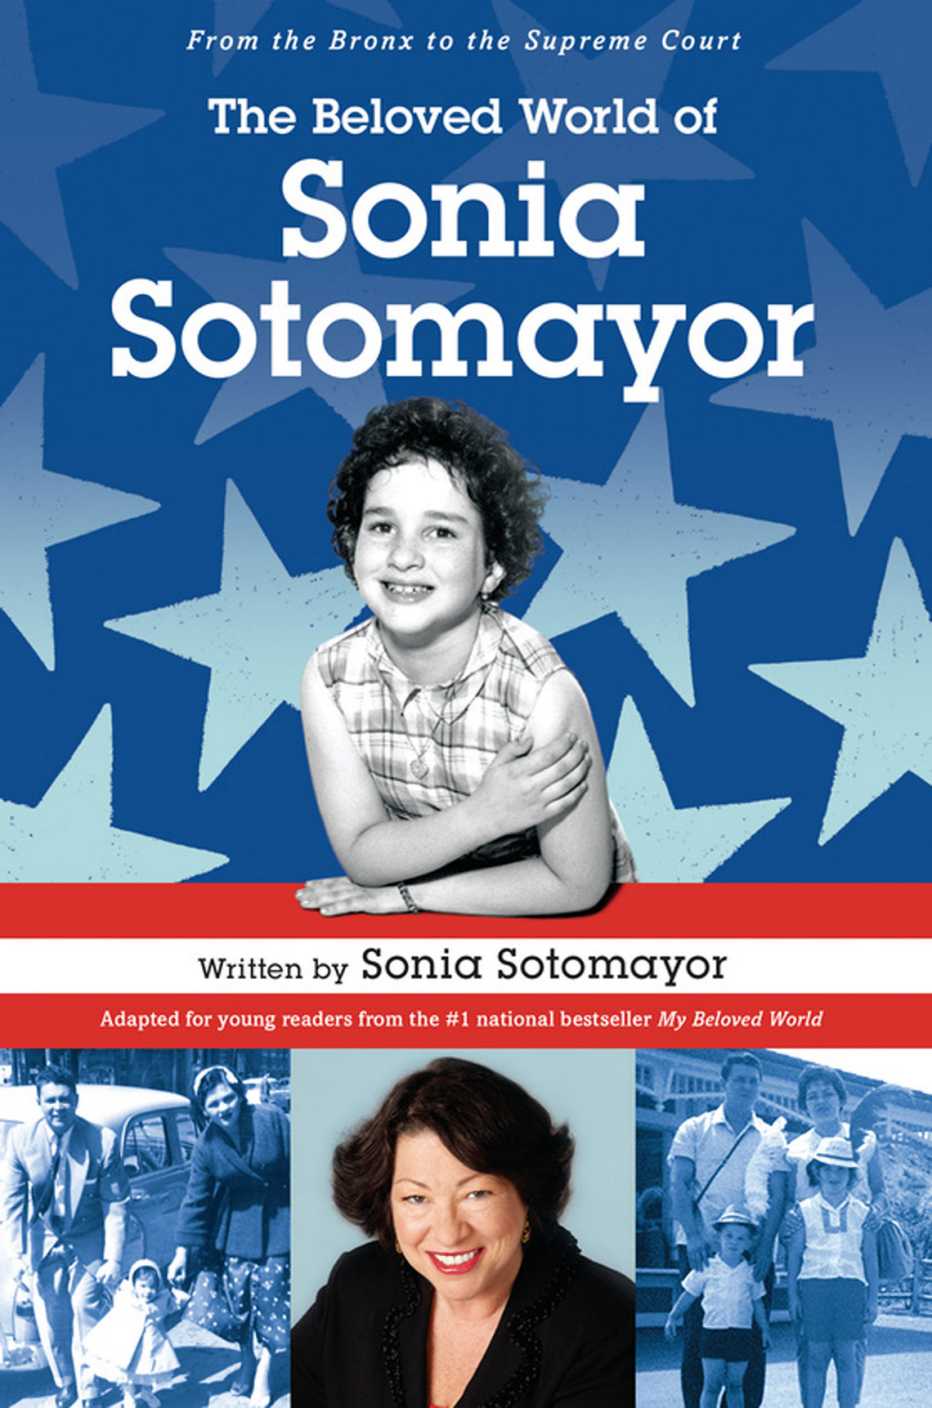 Carátula del libro de Sonia Sotomayor "The Beloved World of Sonia Sotomayor".